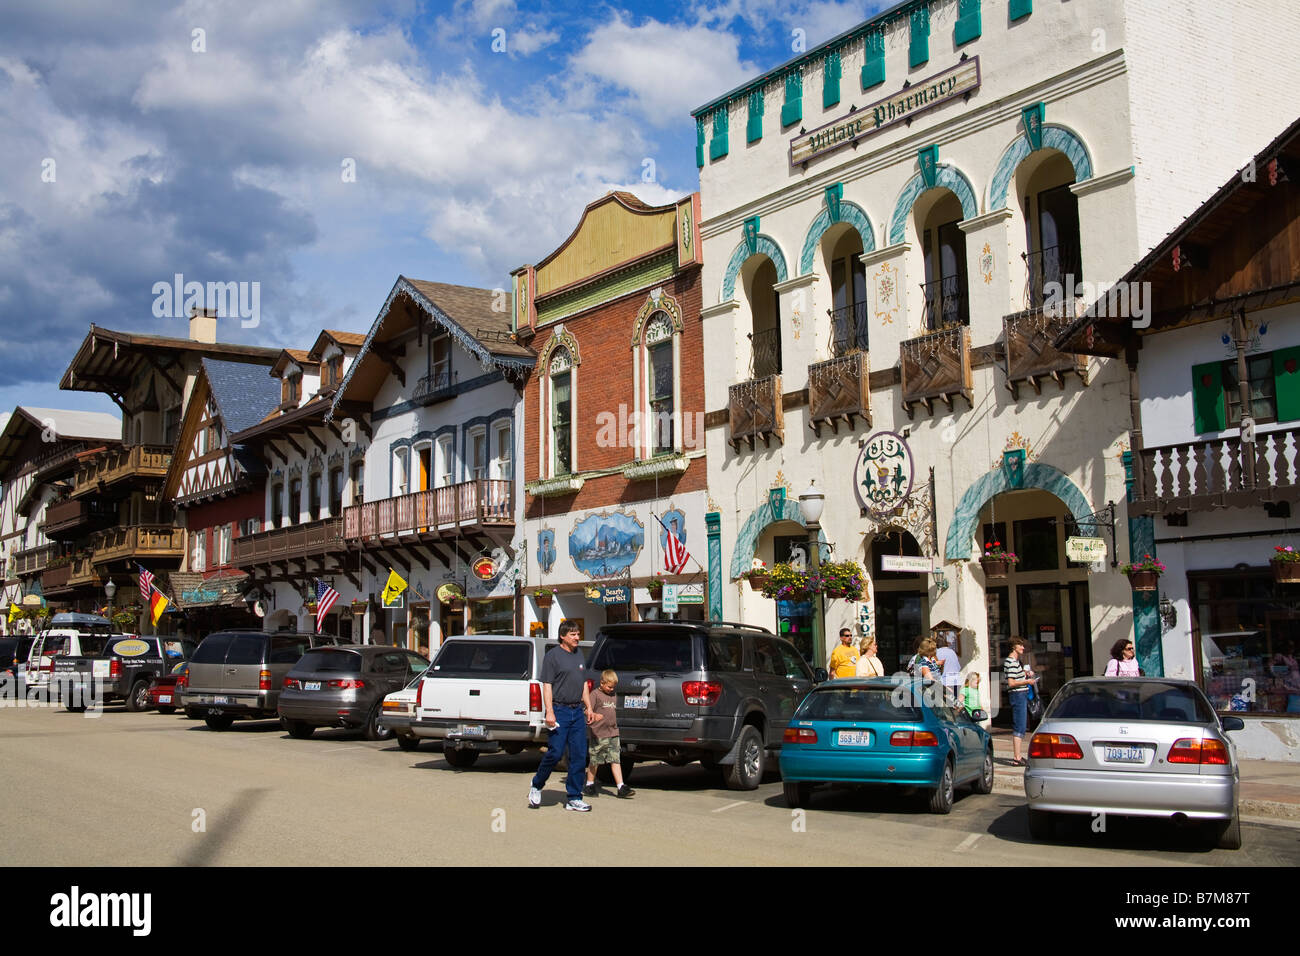 Austrian Architecture Leavenworth Bavarian Village Washington State USA Stock Photo